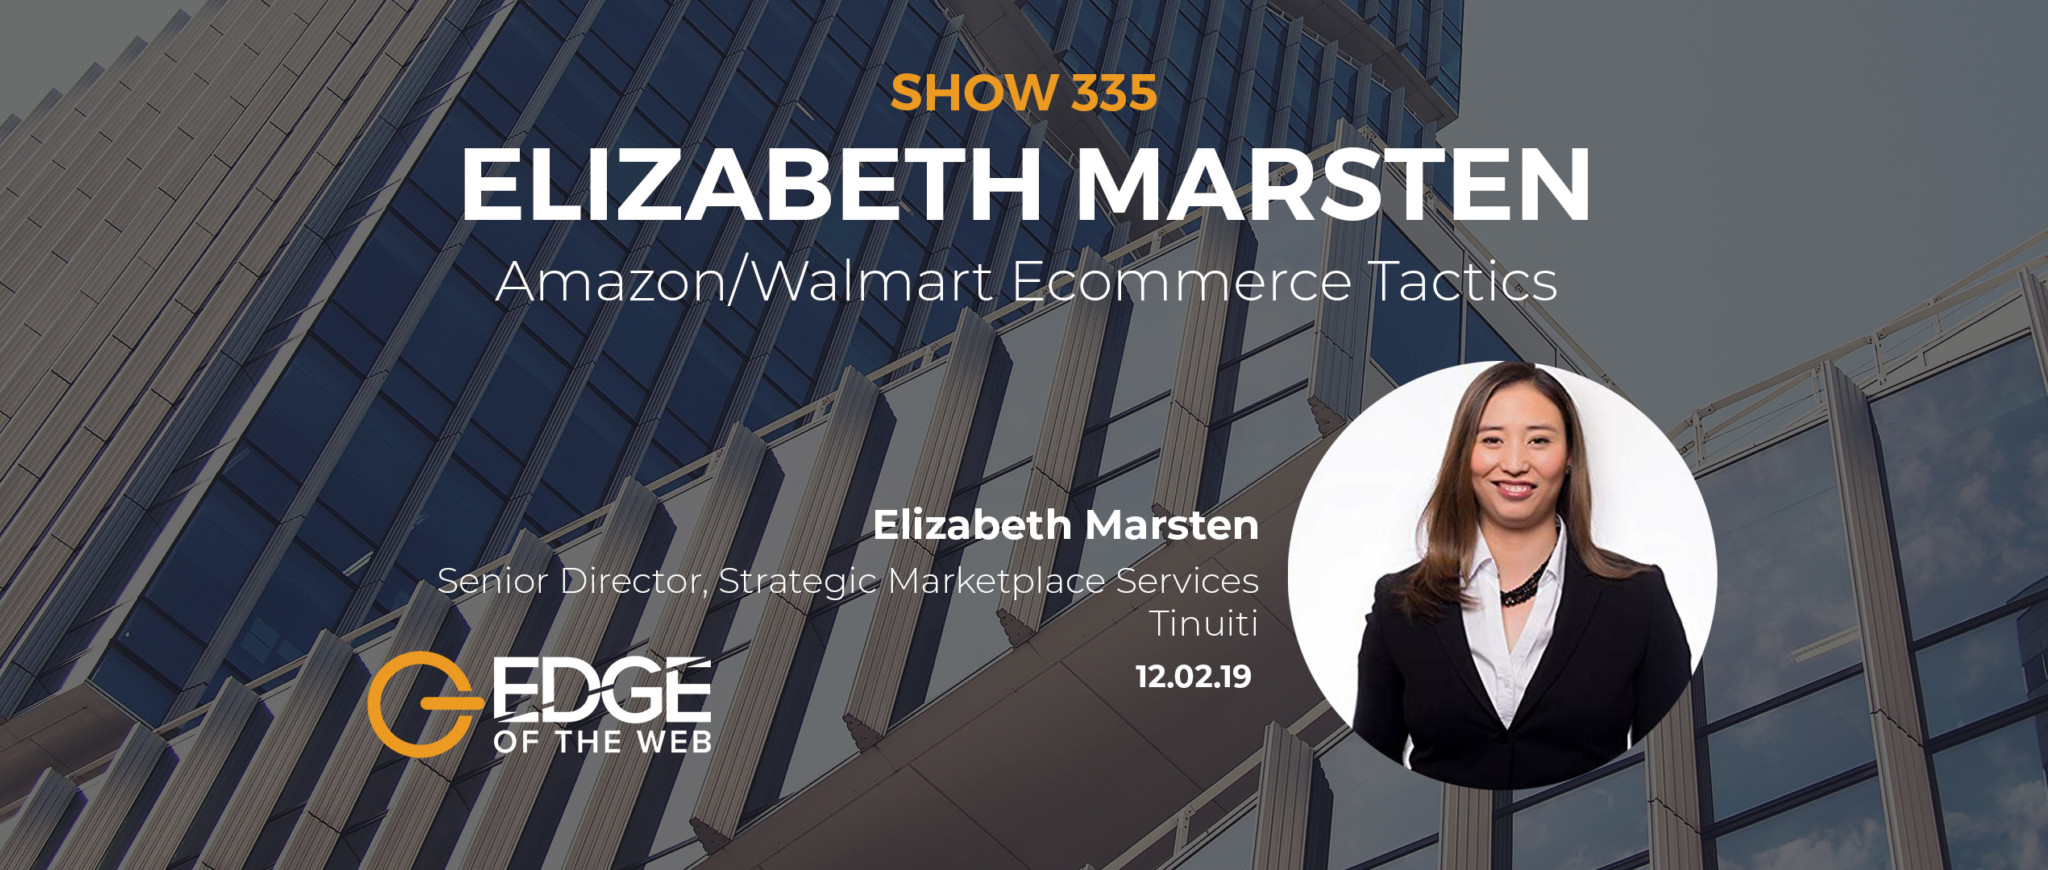 Show 335: Amazon/Walmart Ecommerce Tactics, featuring Elizabeth Marsten